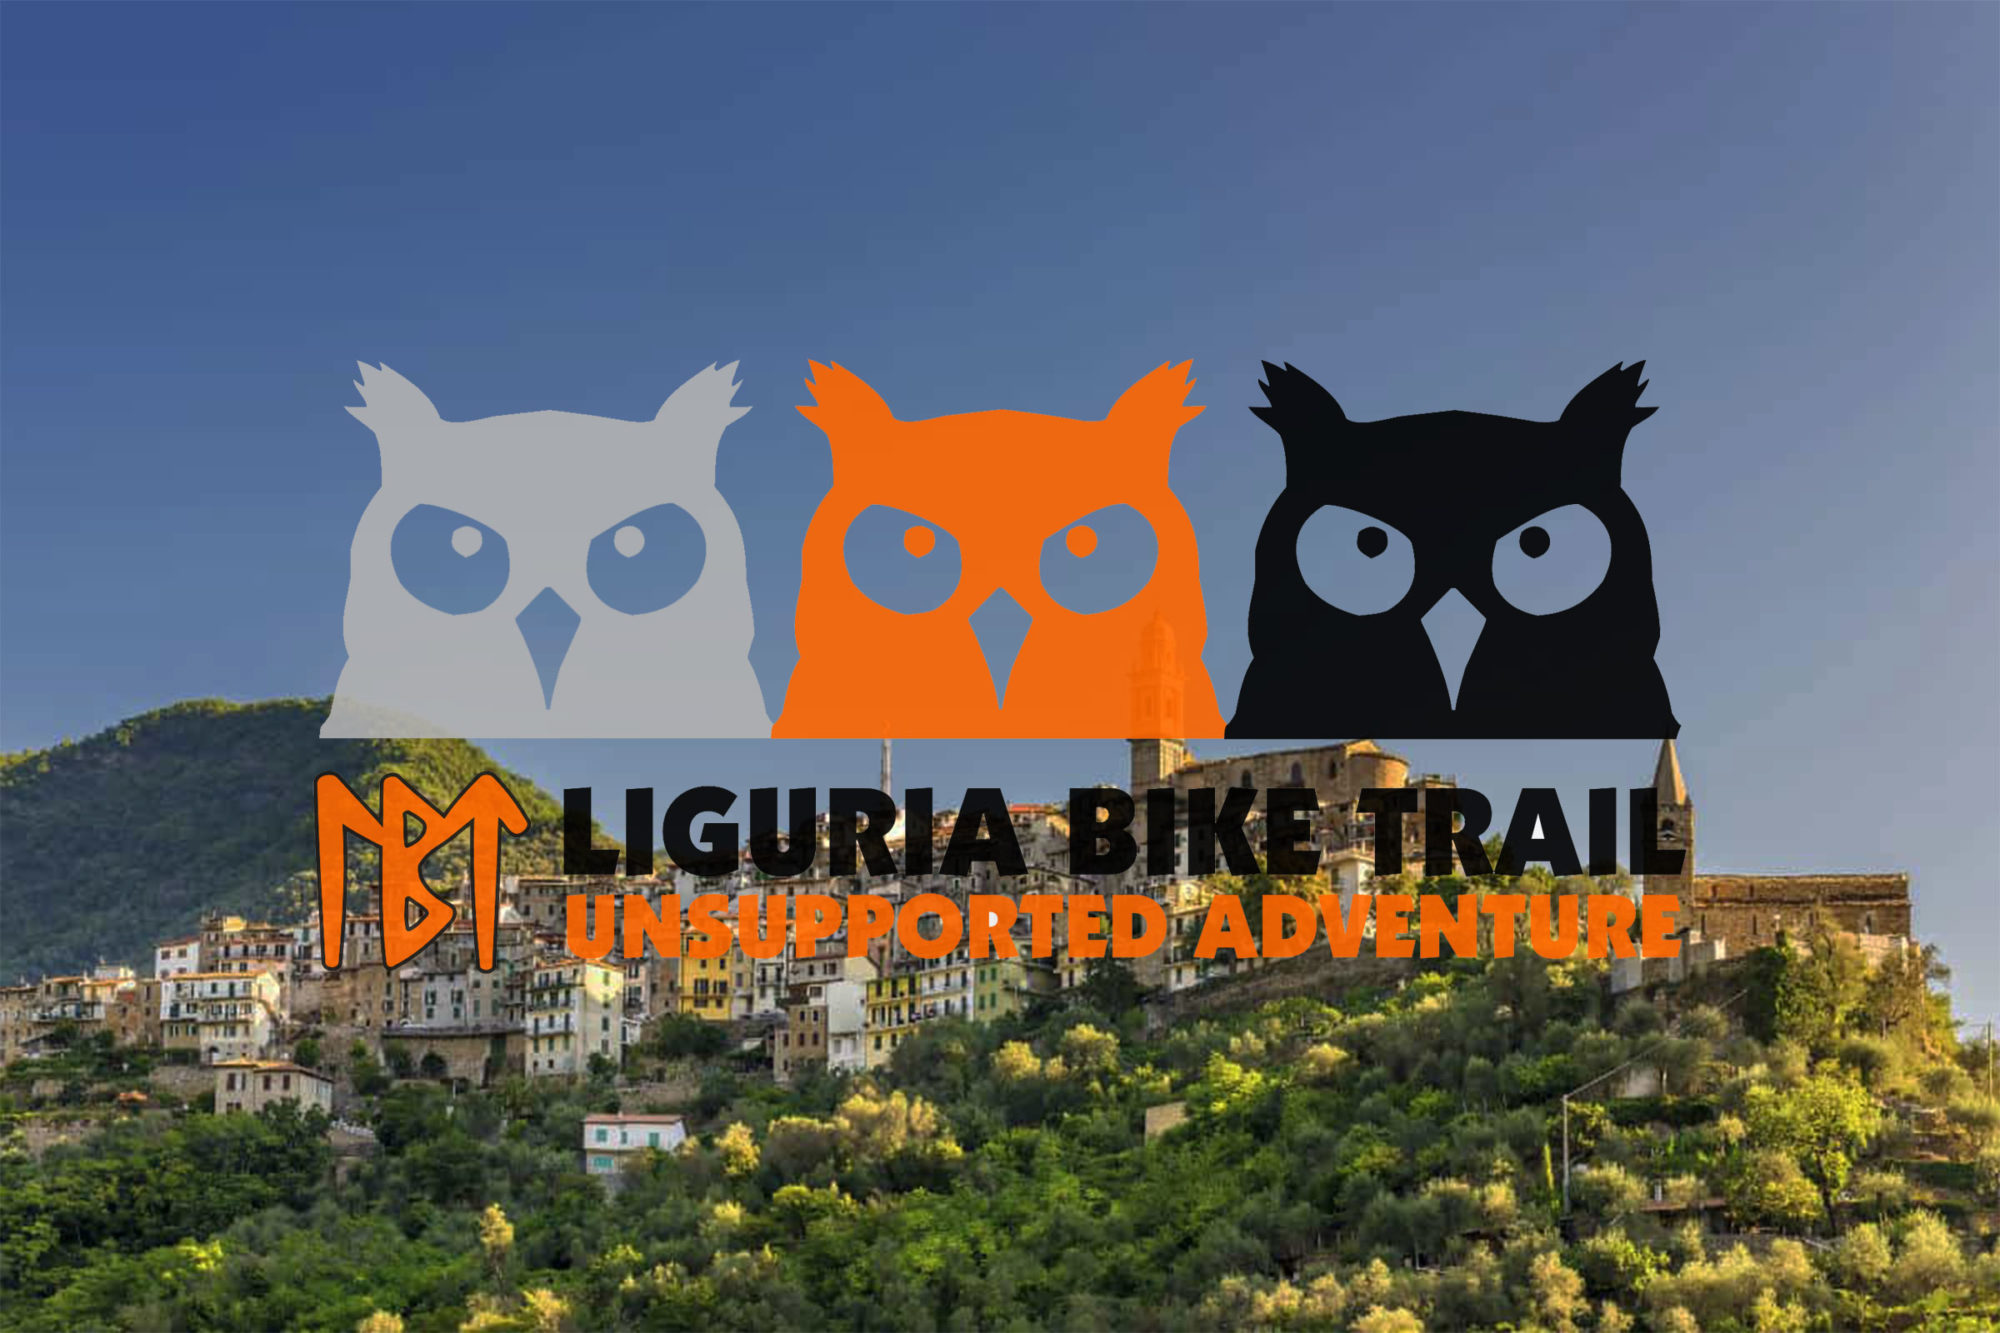 Liguria Bike Trail